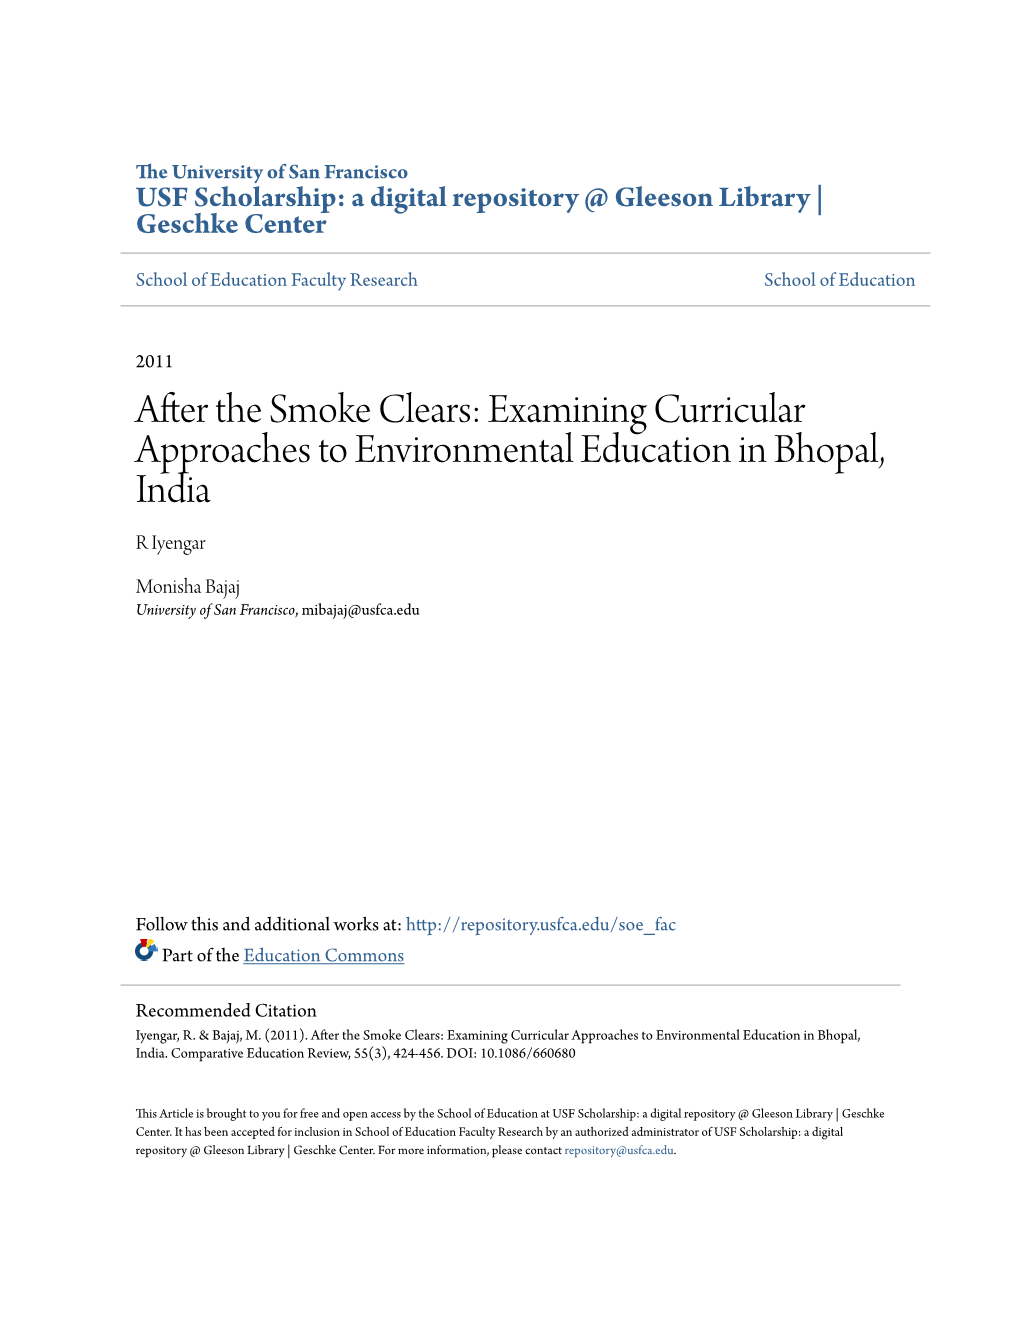 Examining Curricular Approaches to Environmental Education in Bhopal, India R Iyengar